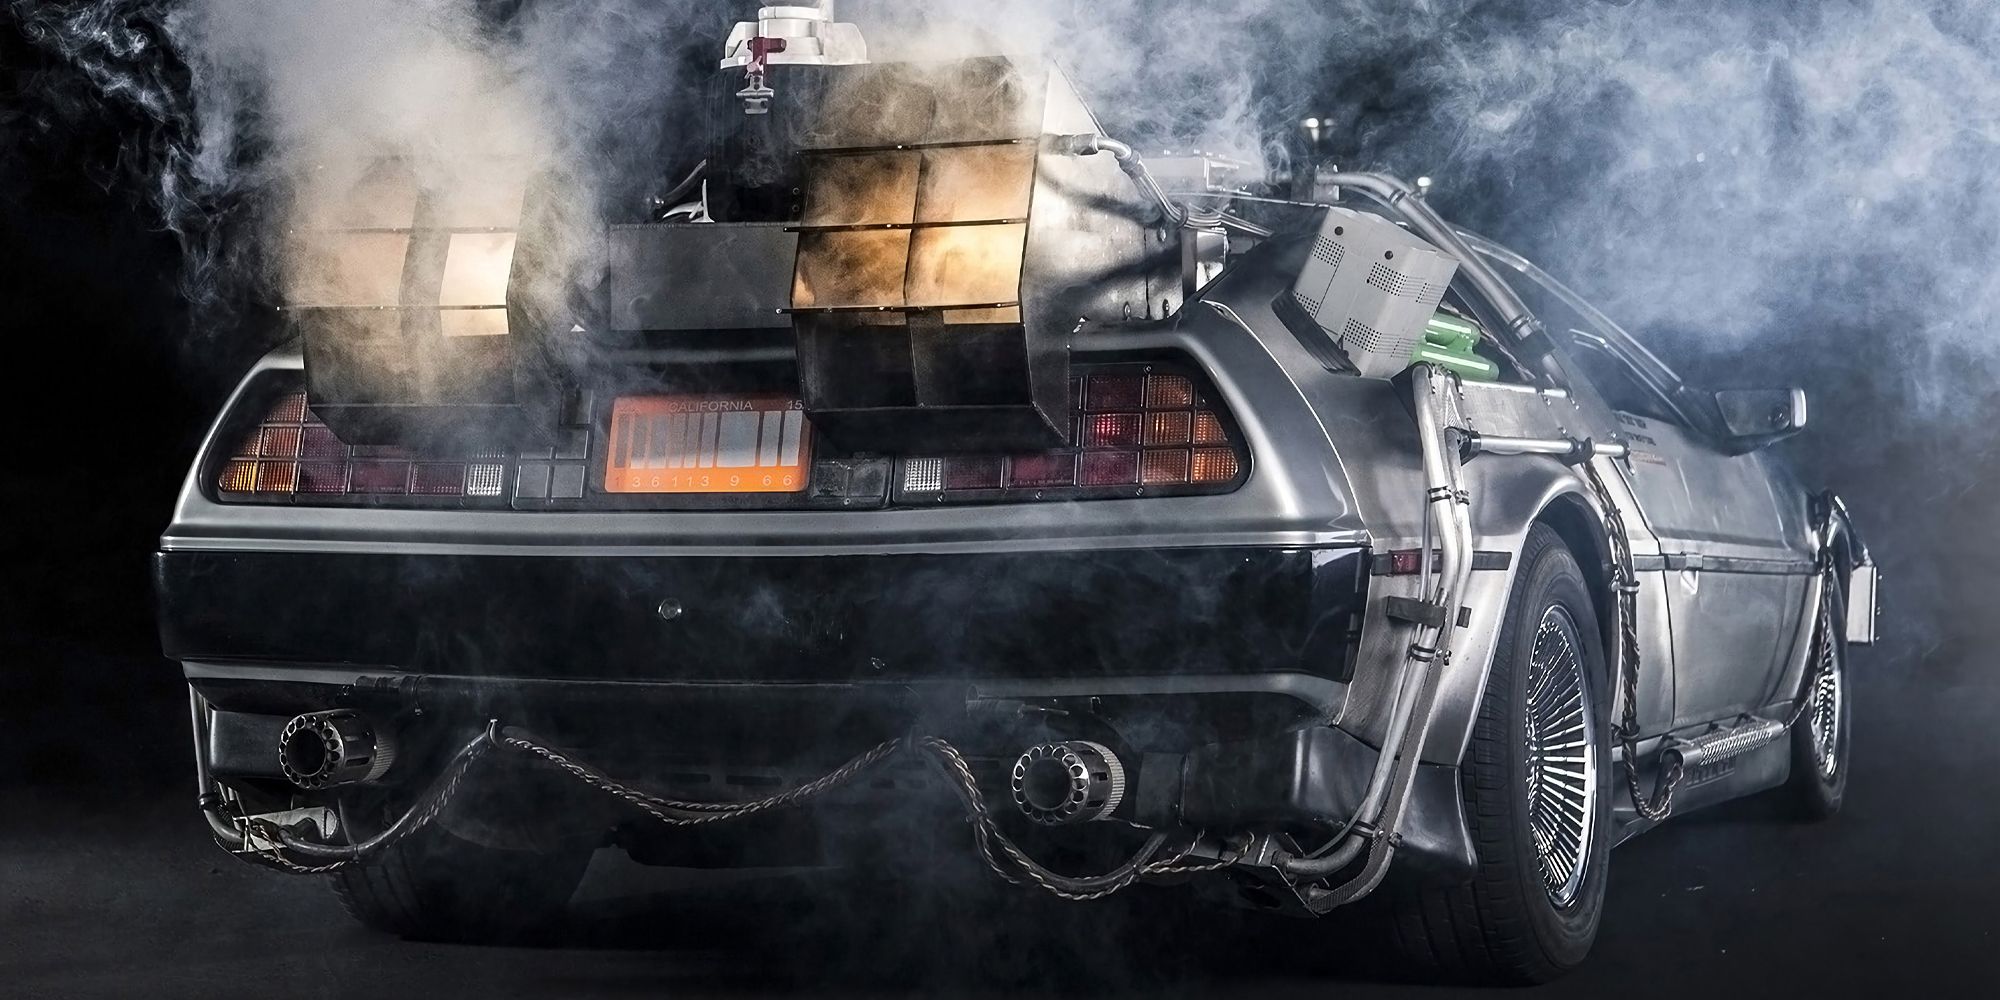 The rear of the DeLorean time machine